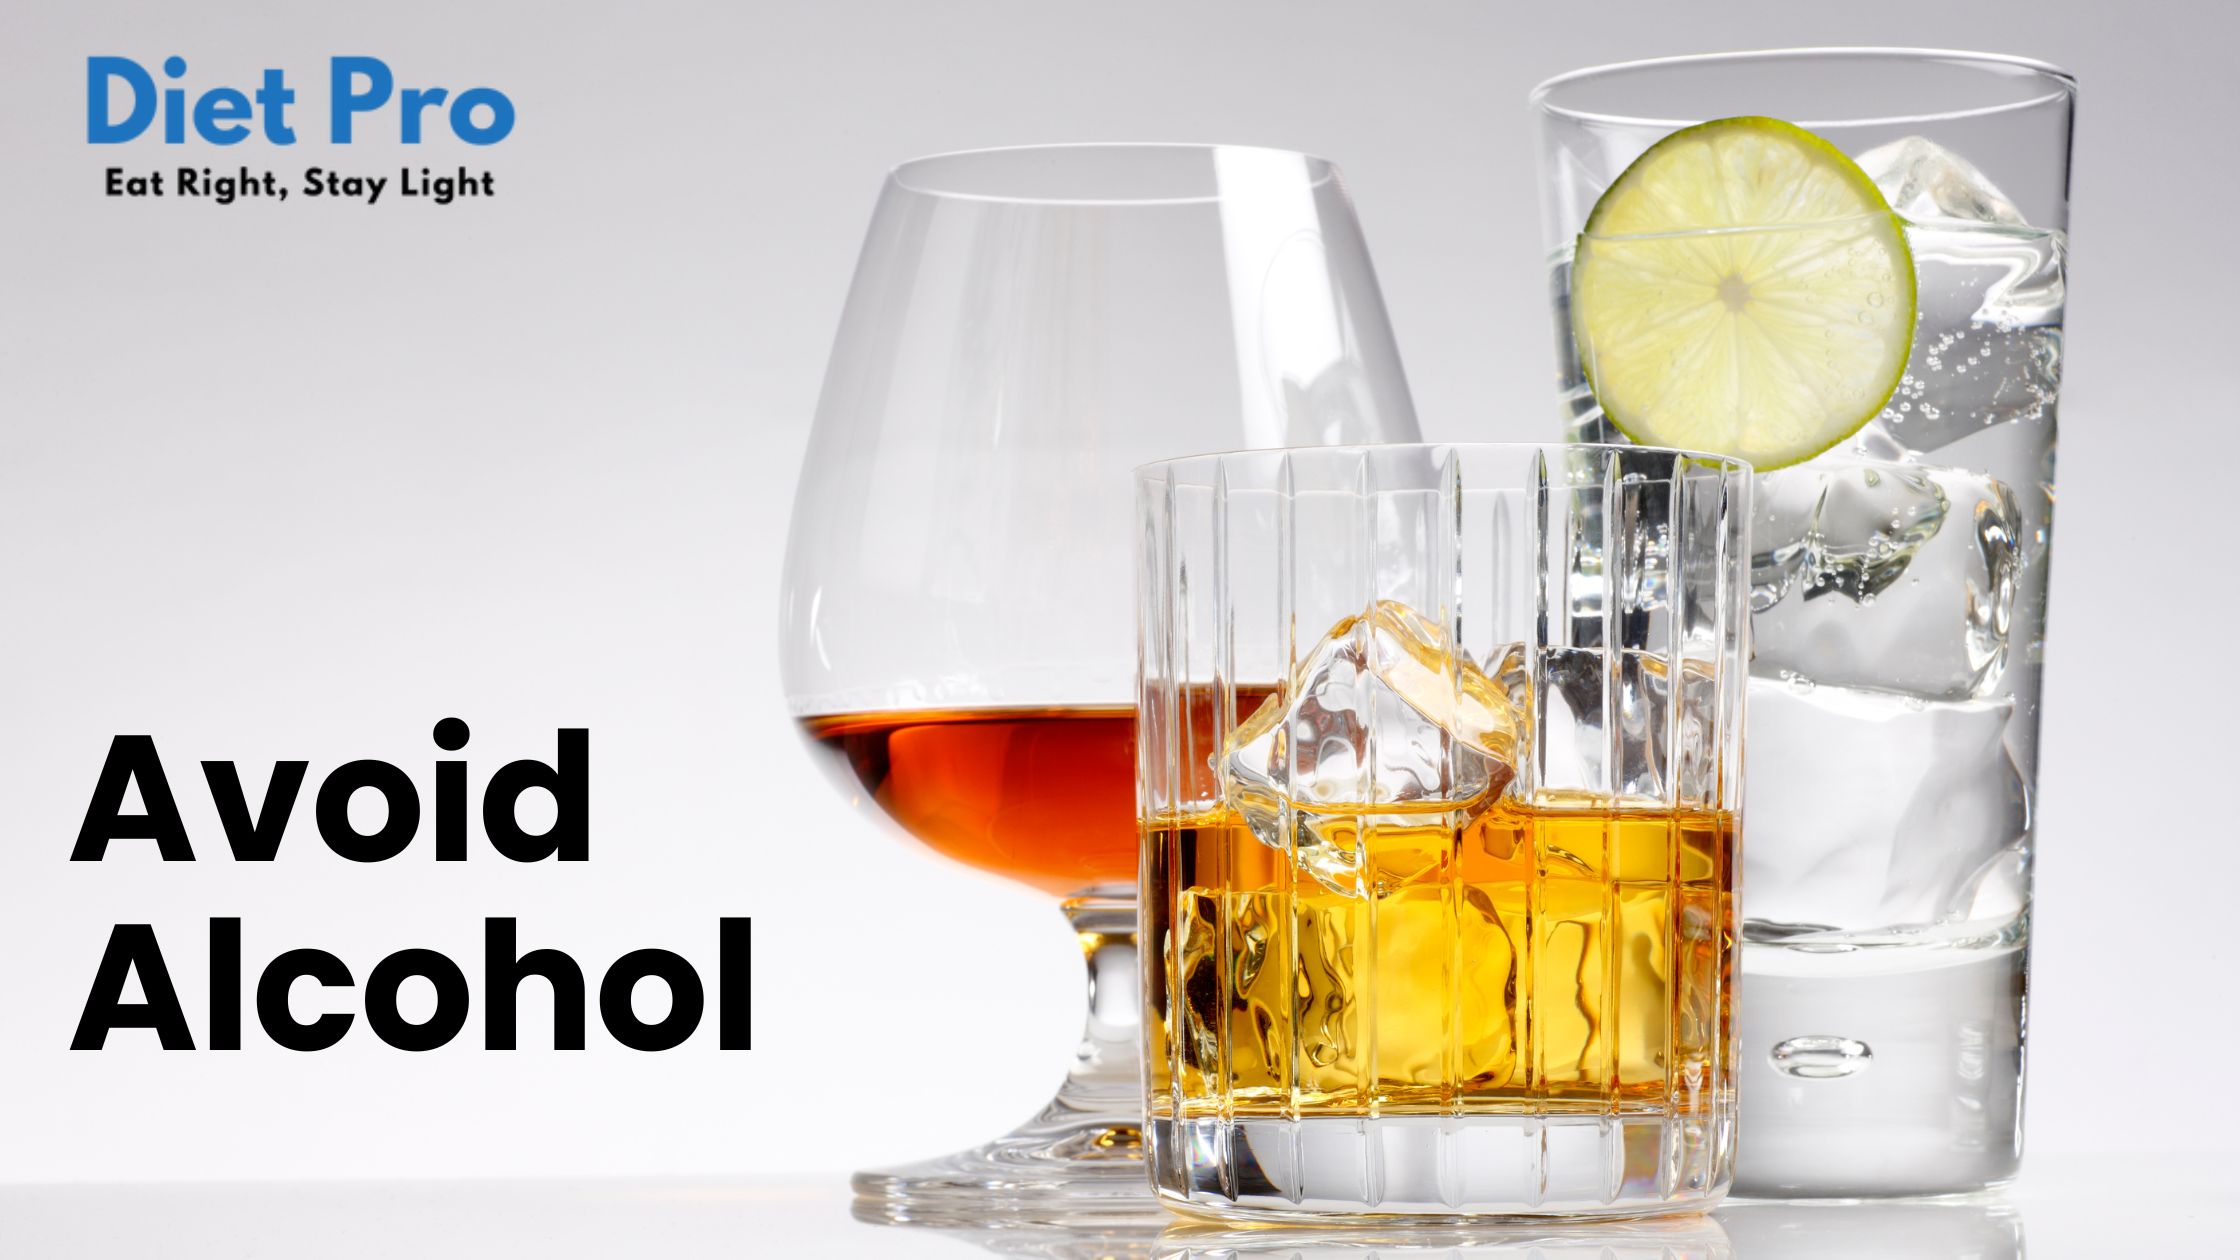 Avoid 
Alcohol